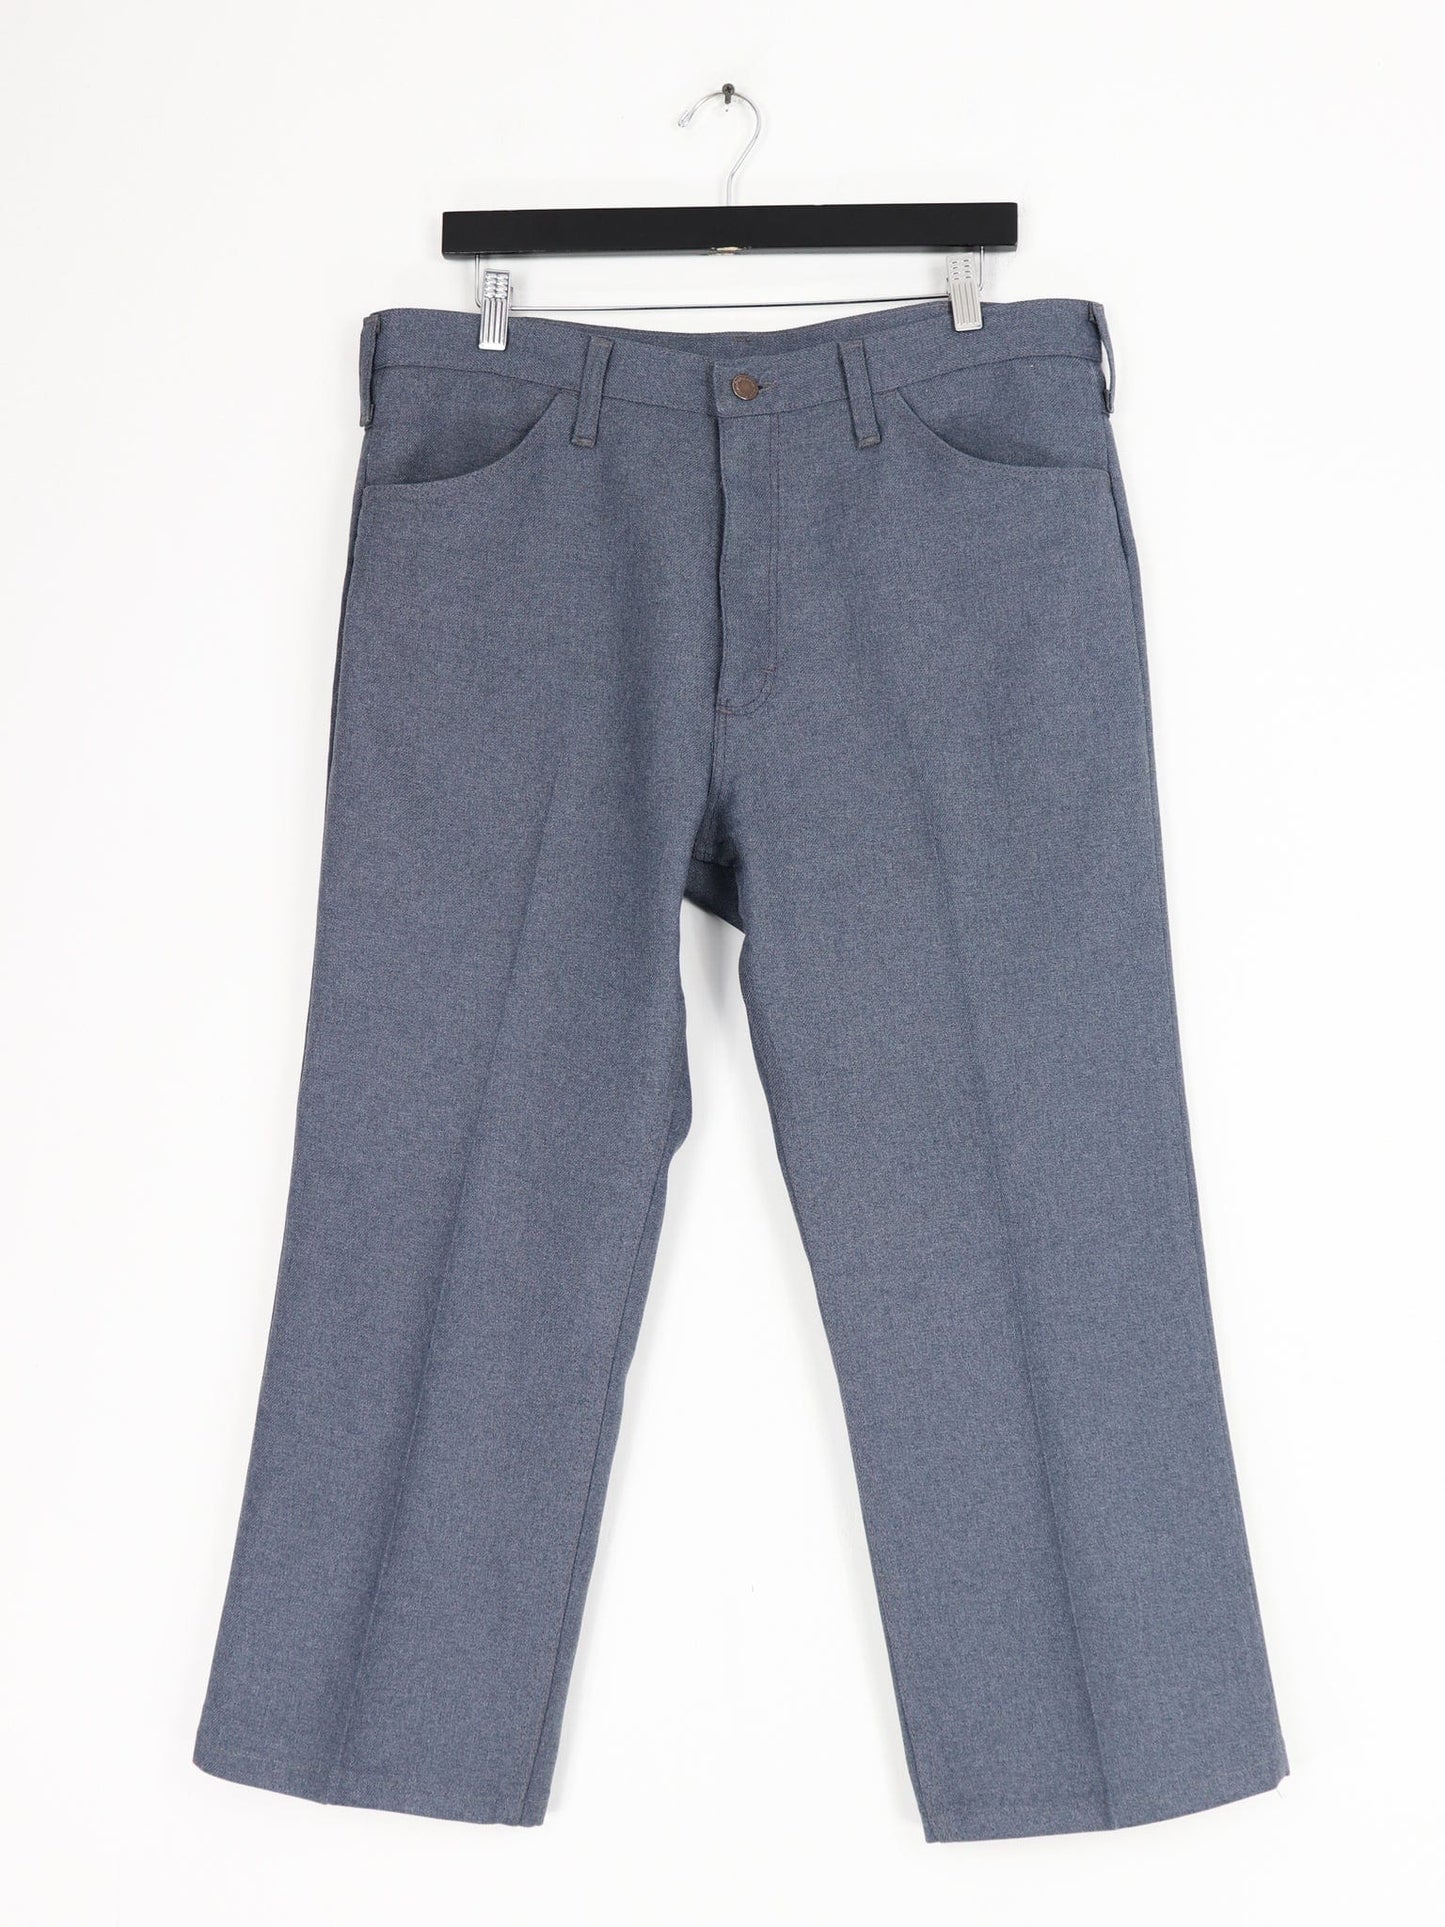 Wrangler Pants Vintage Wrangler Wrancher Cropped Dress Jeans Size 36x32 Fits Like 36x24